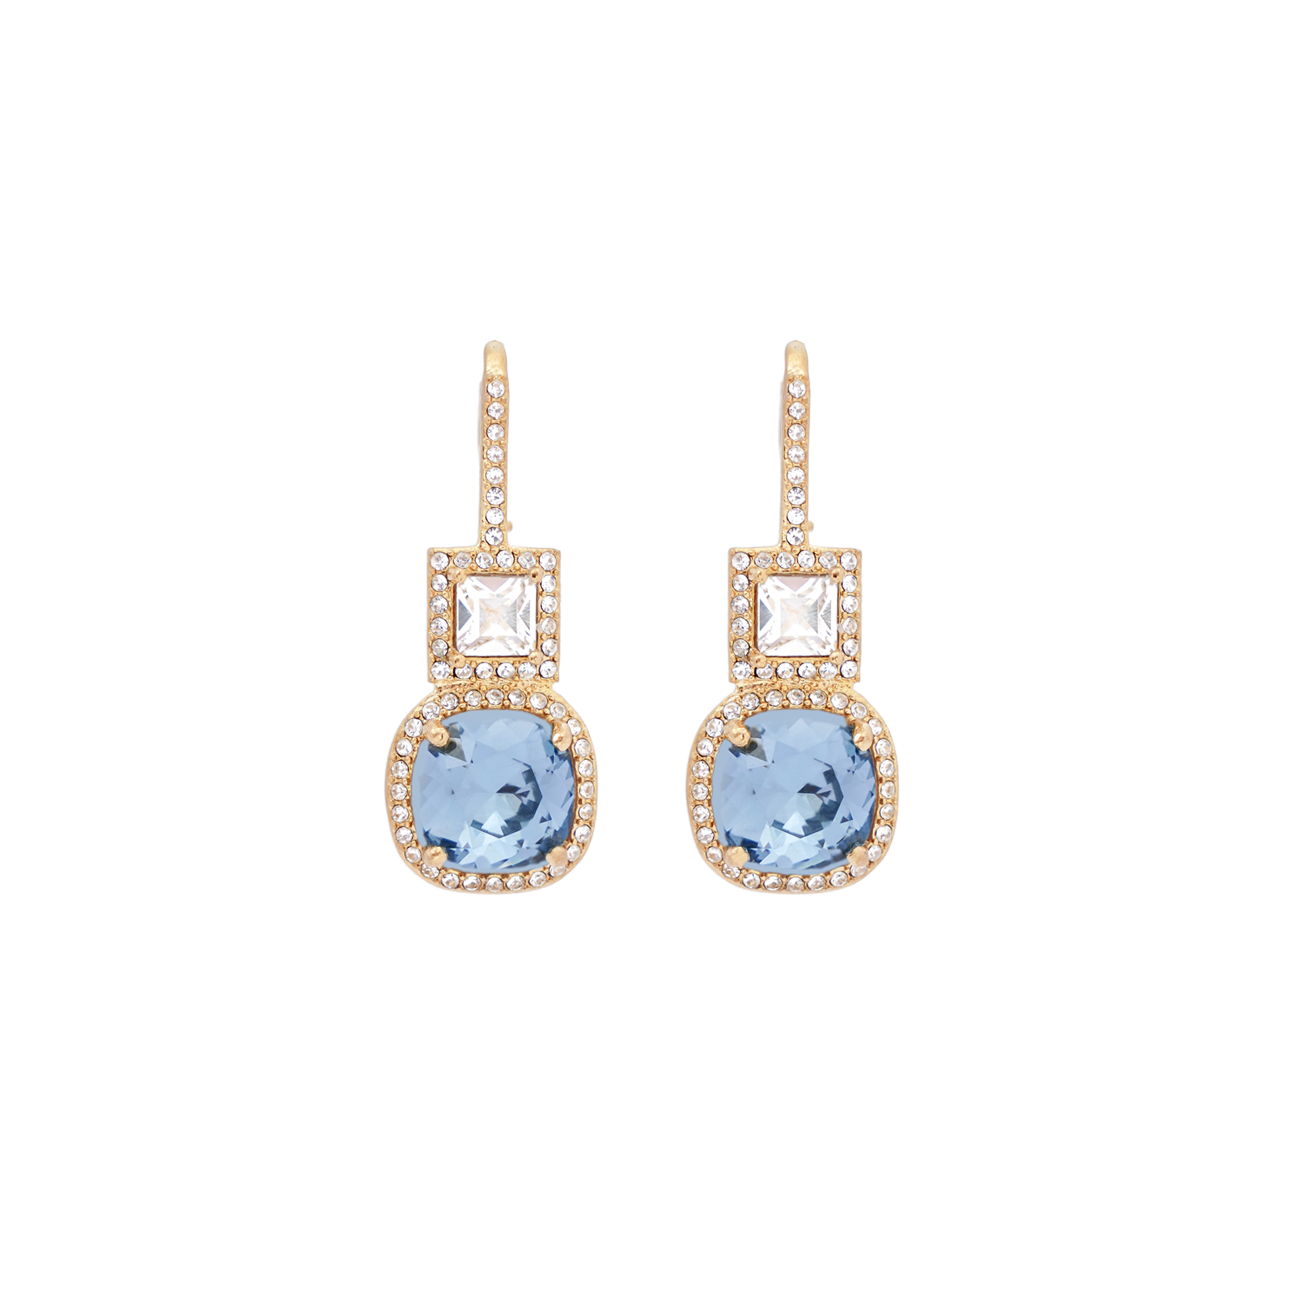 Tamara Crystal earrings, Denim blue/Clear